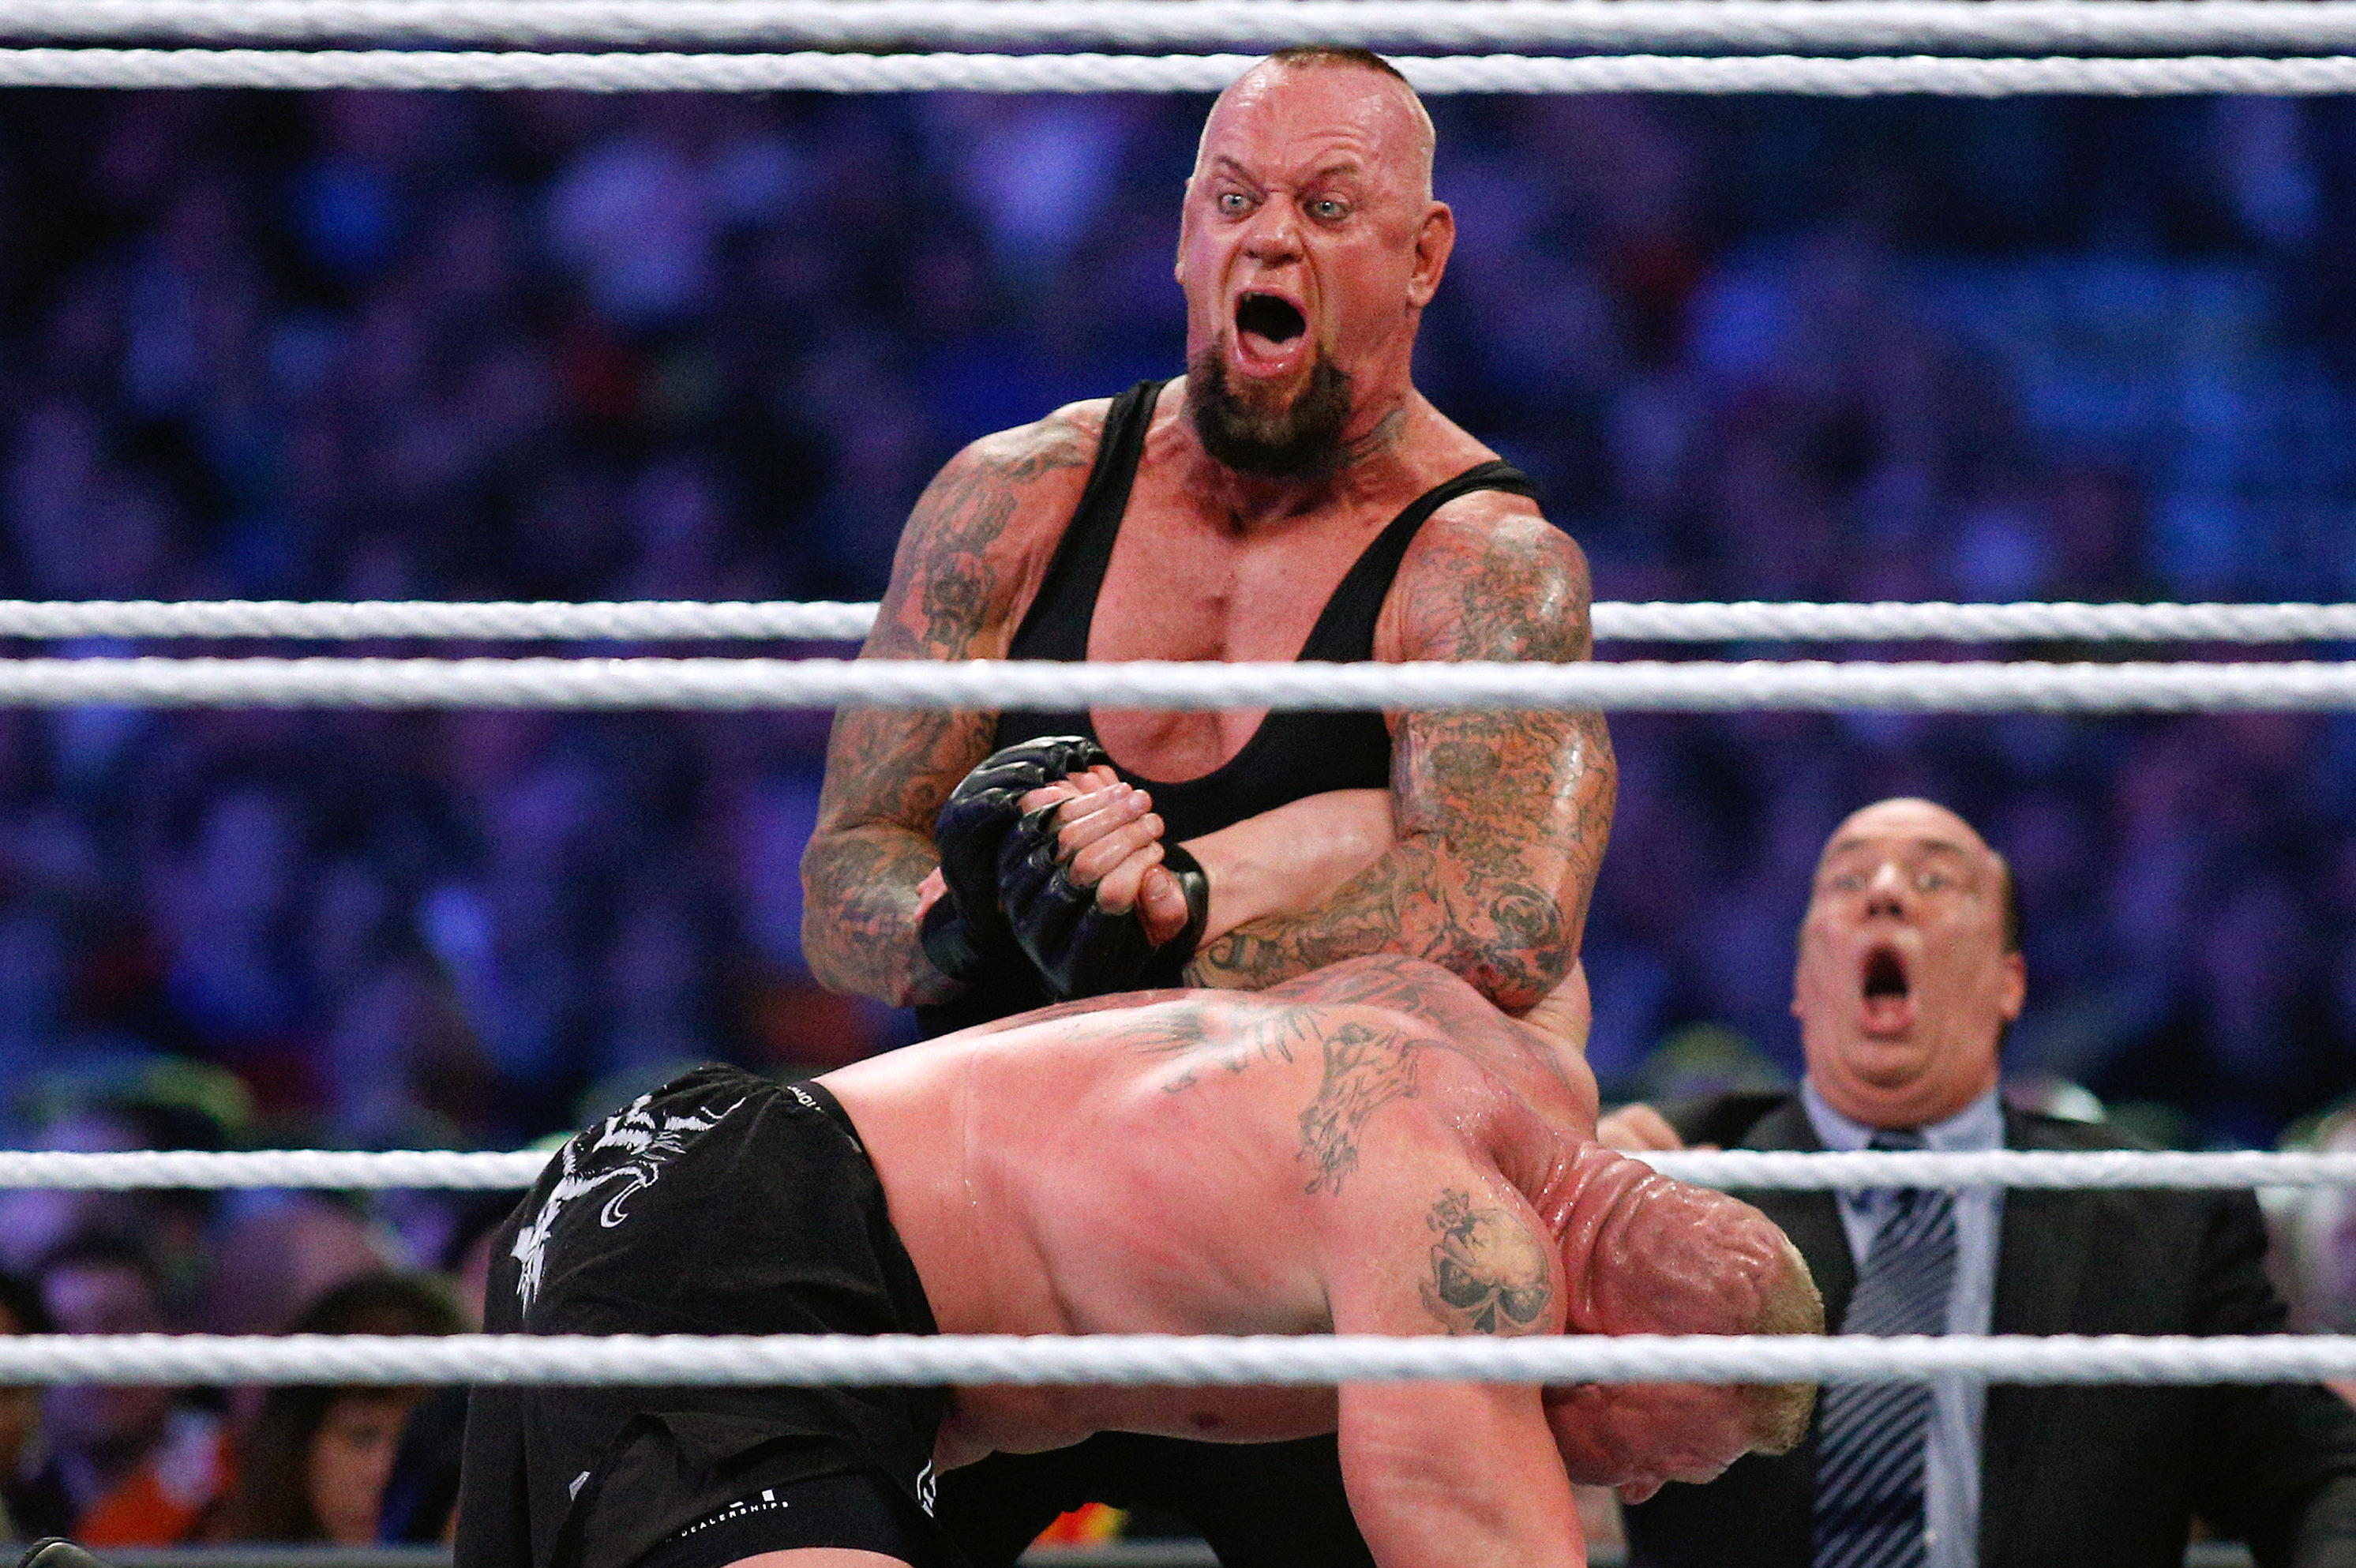 The Undertaker vs. Goldberg Set for WWE Super ShowDown in Saudi